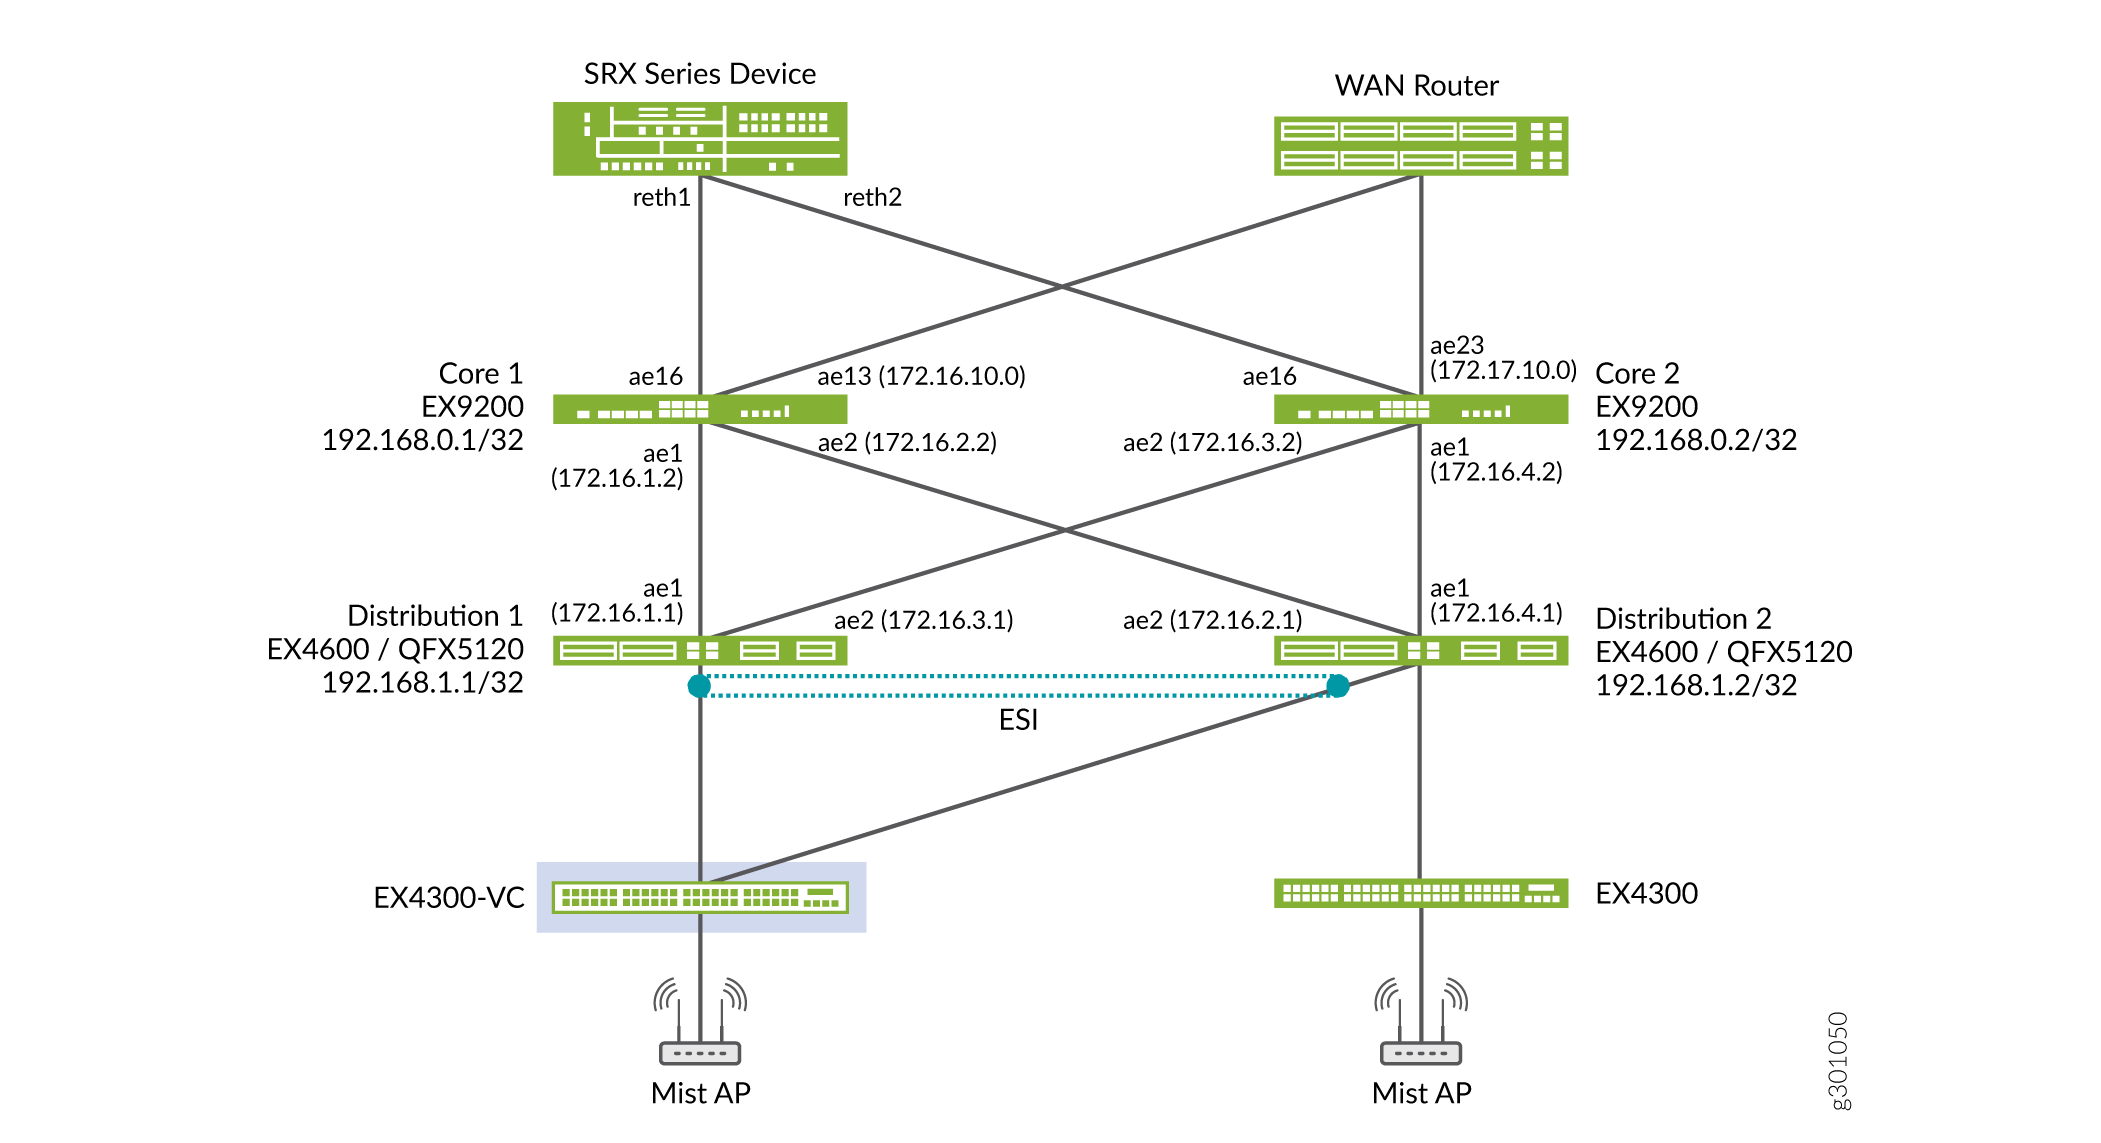 The ERB EVPN-VXLAN Campus Network Architecture